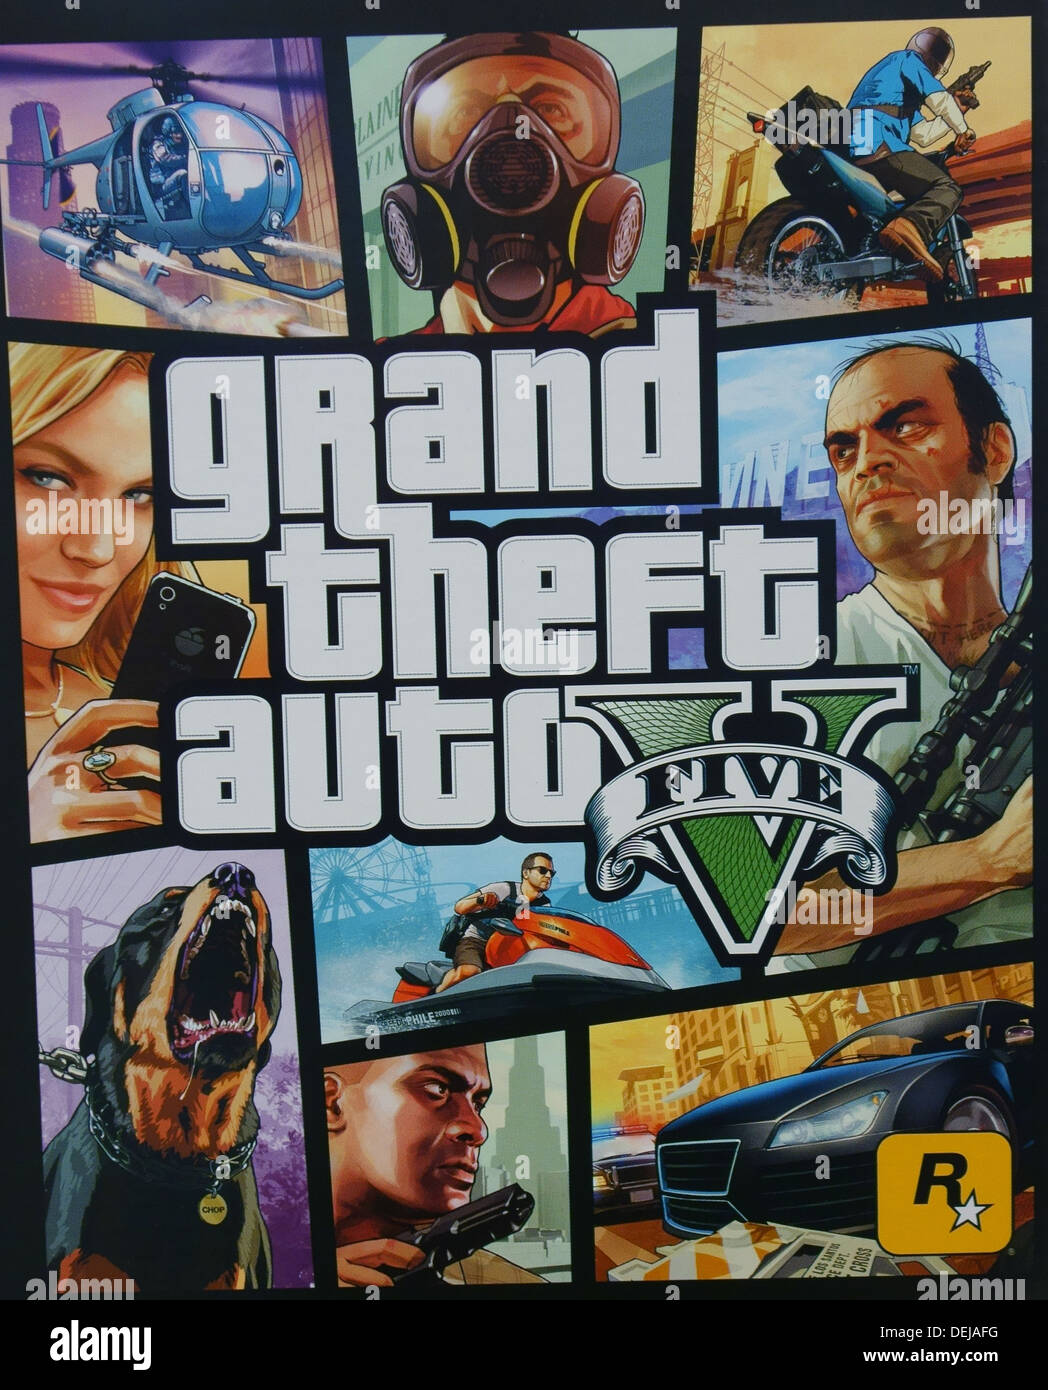 Grand Theft Auto V - PS3 - ShopB - 14 anos!